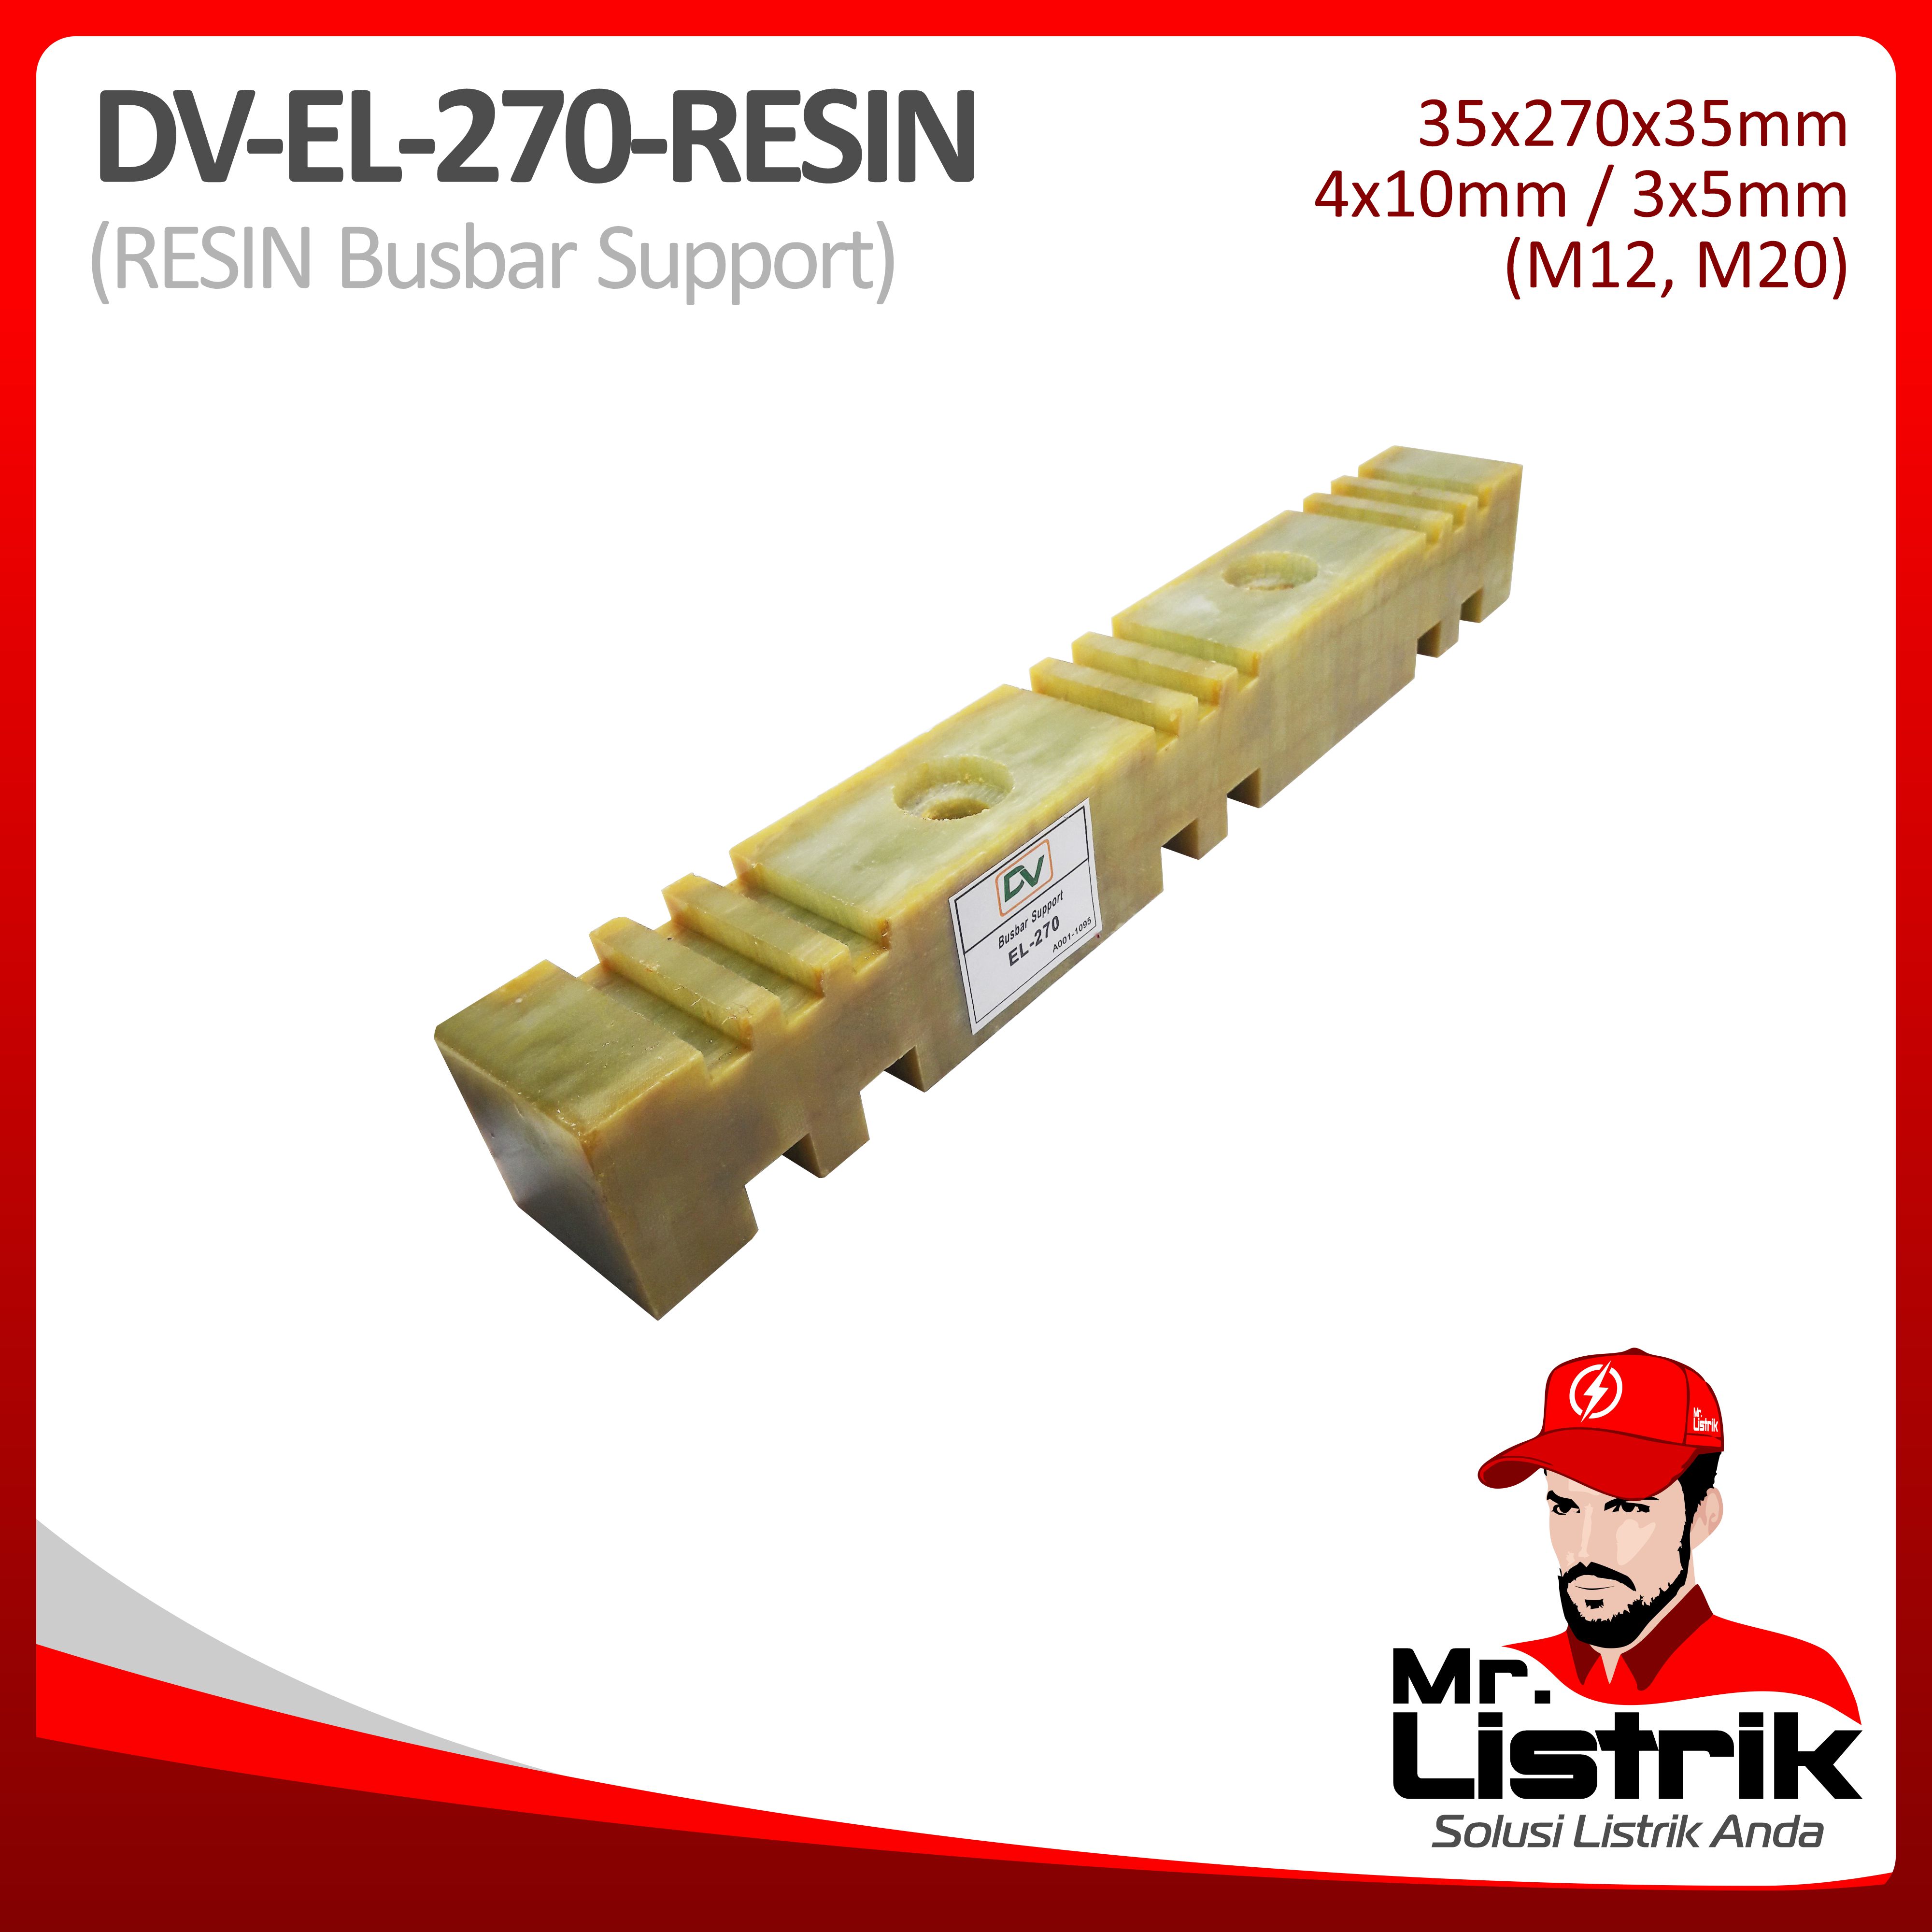 Busbar Support Cast Resin DV EL-270